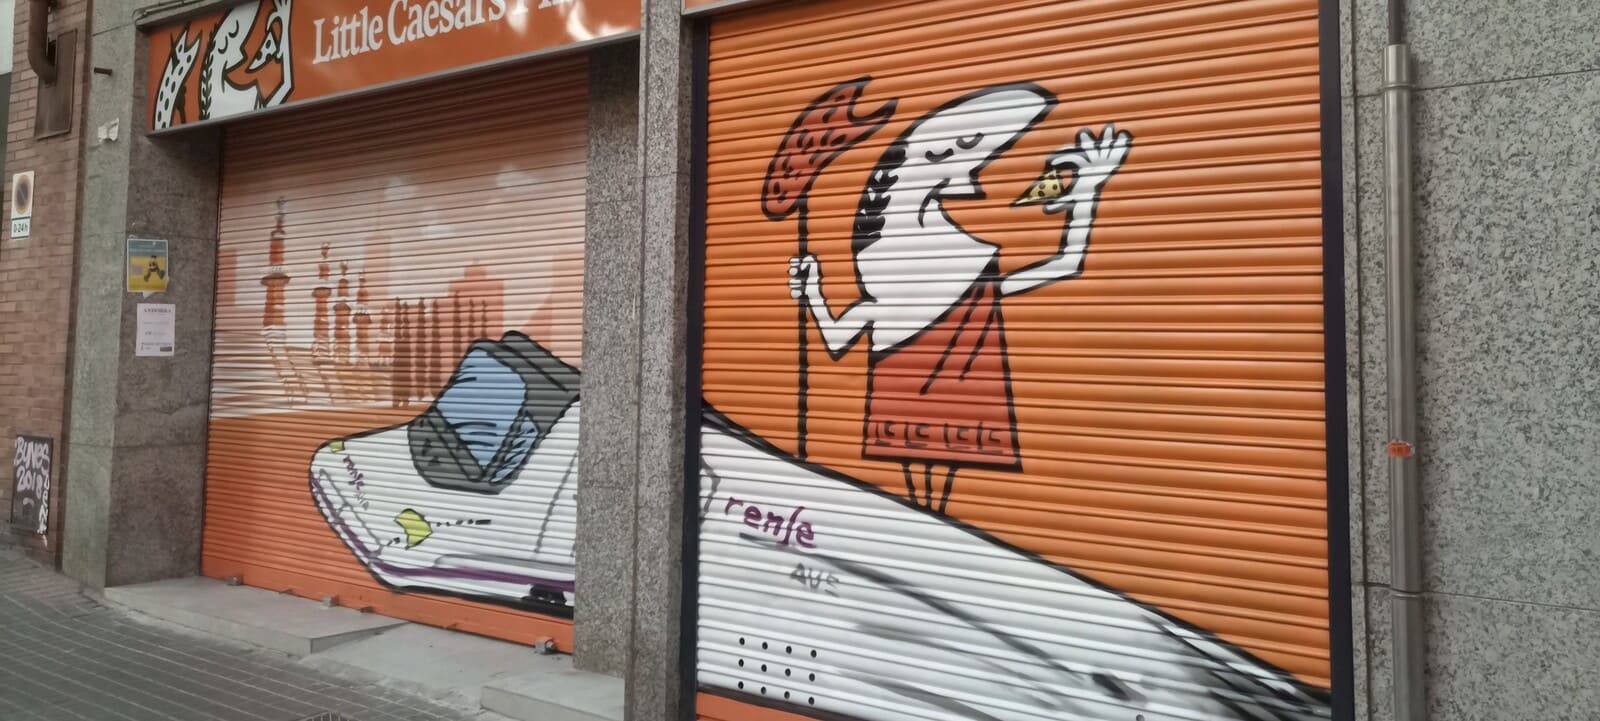 FO DE Persiana decorada graffiti Little Caesars Pizza en Barcelona